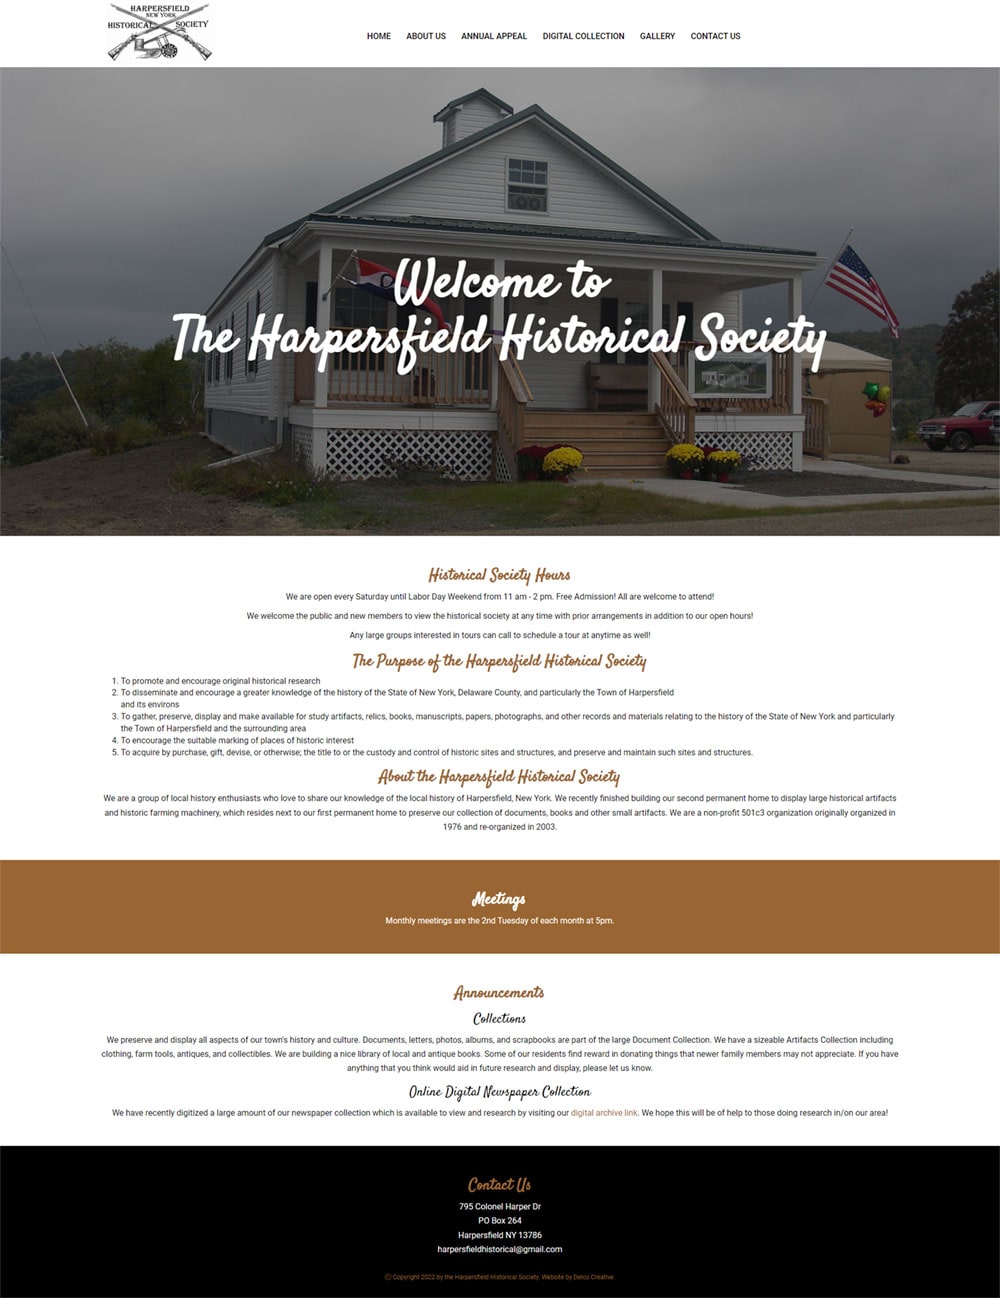 Harpersfield Historical Society Website